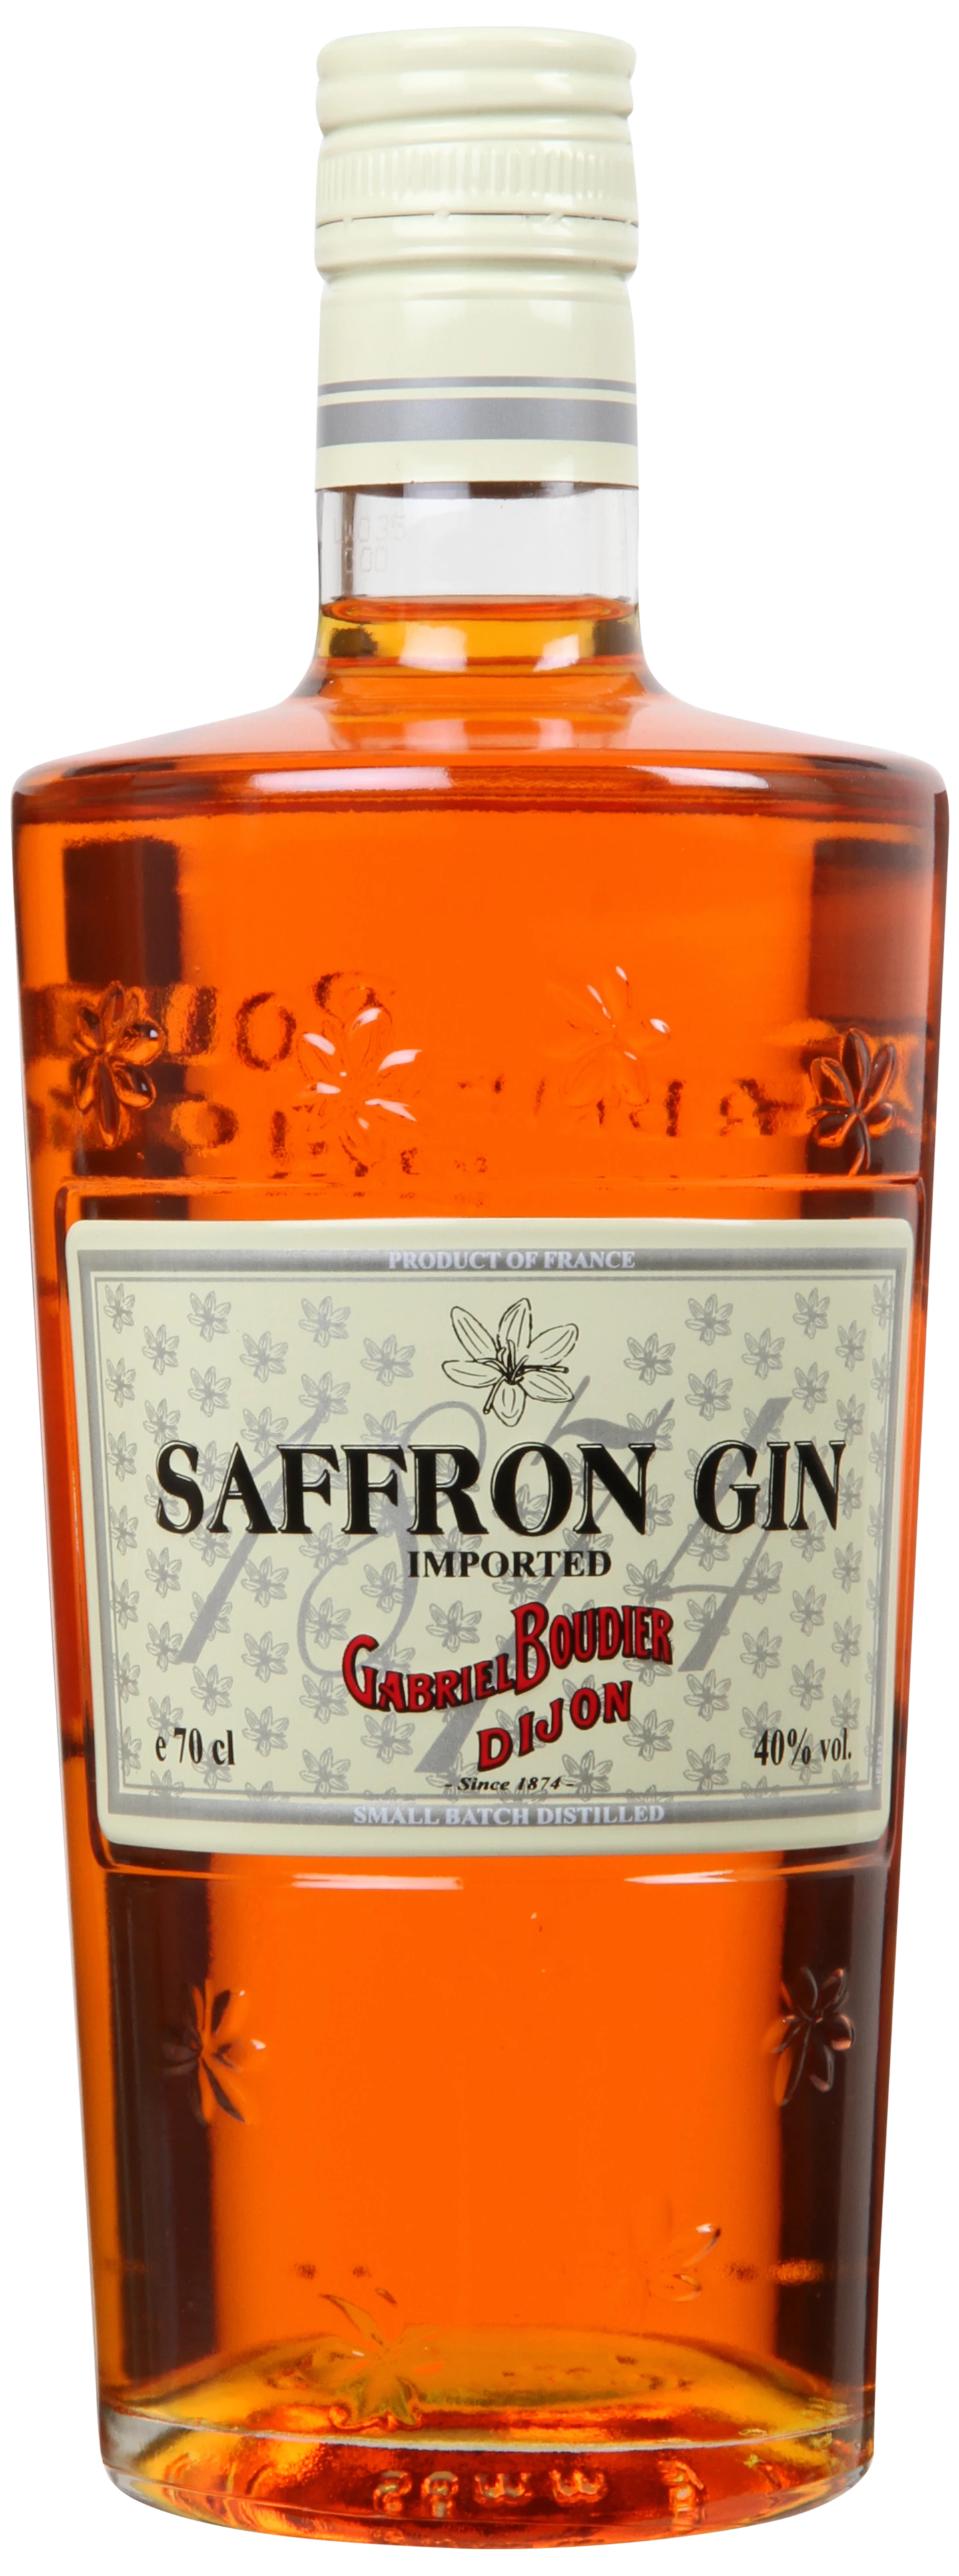 Løgismose Spiritus Saffron Gin frankrig 40% 70cl - 214772